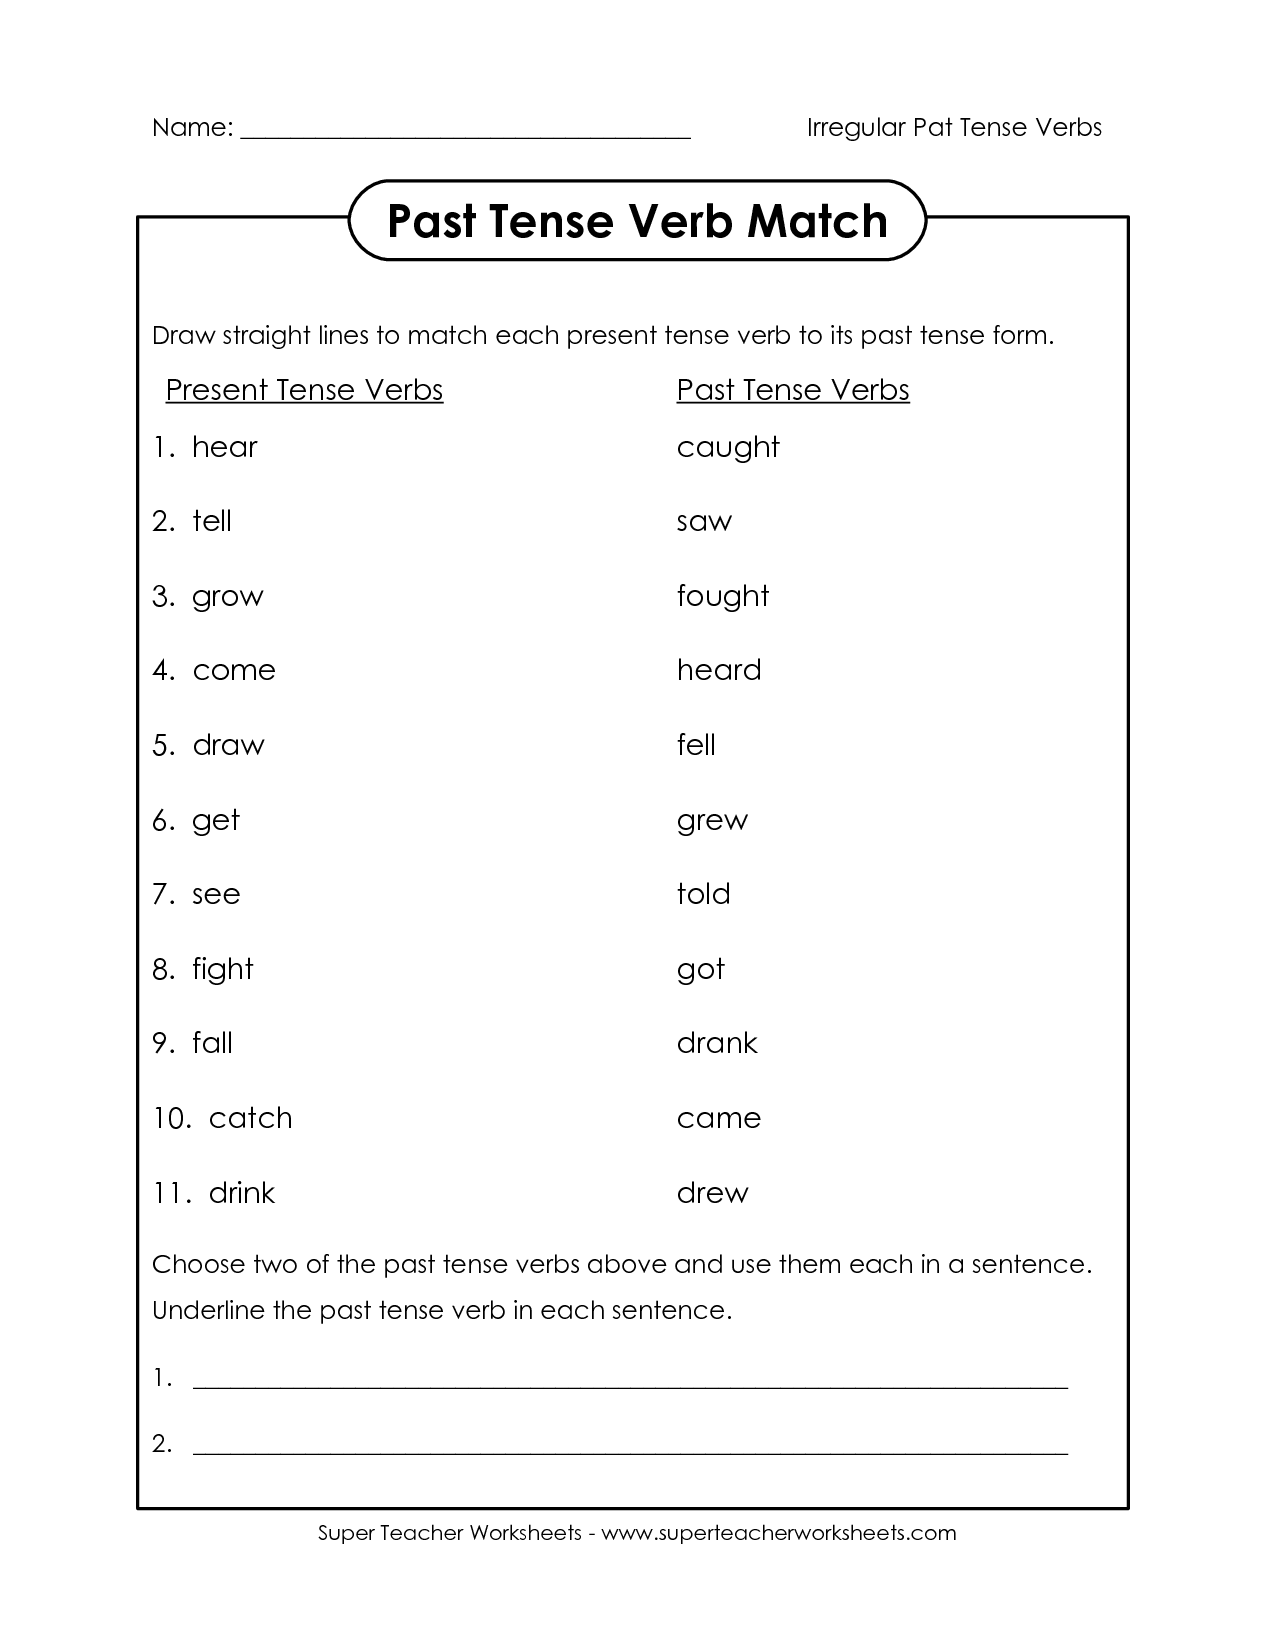 present-and-past-tense-verbs-worksheet